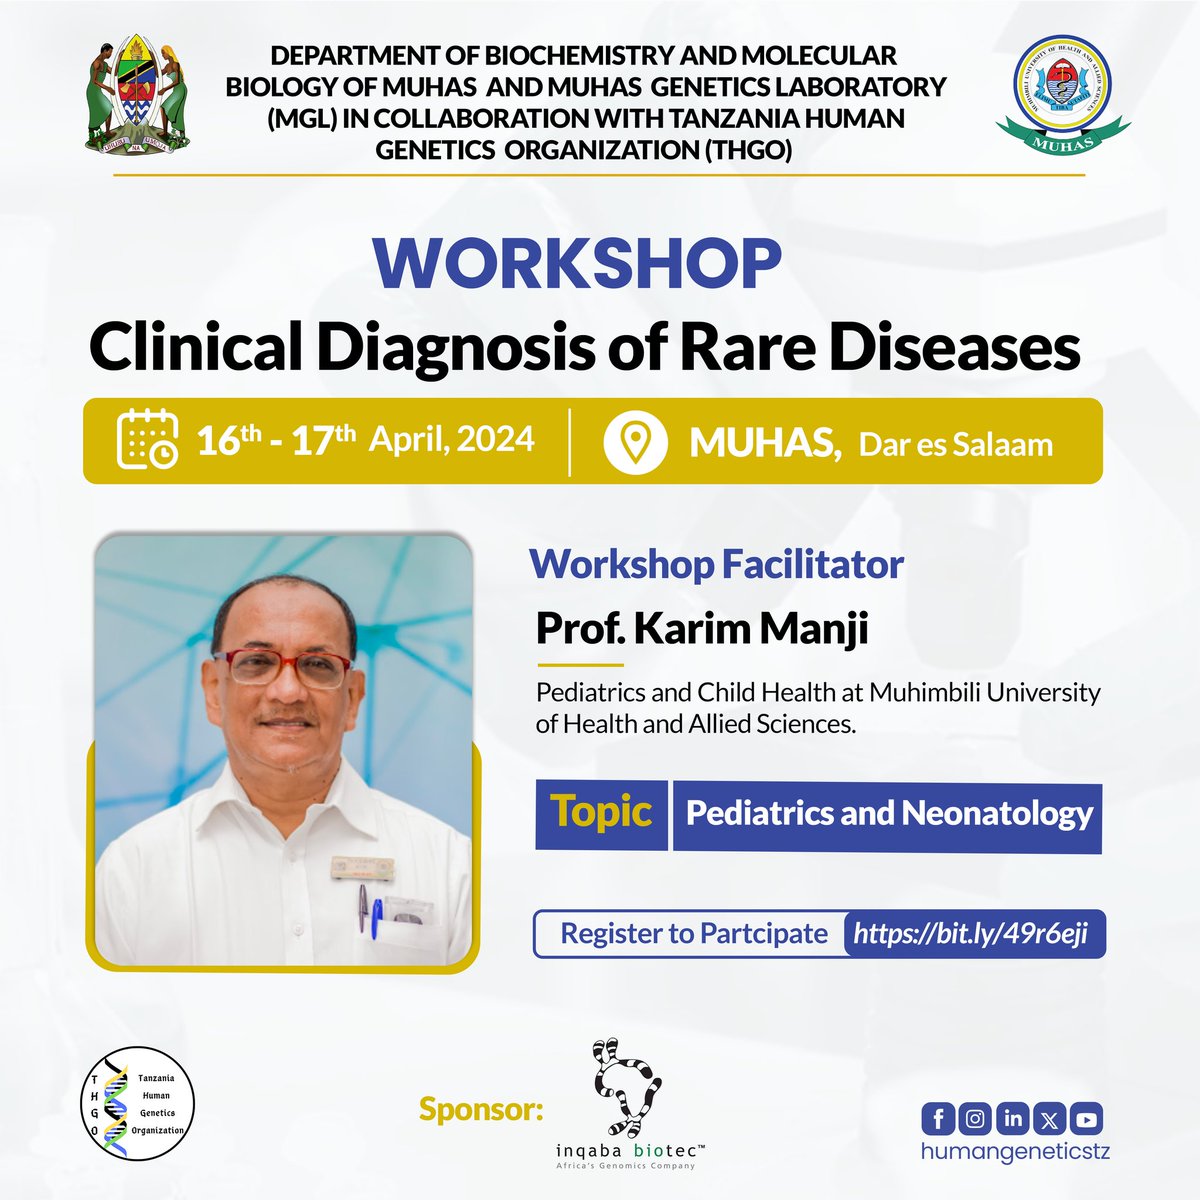 🏷️ Introducing the upcoming #RareDiseasesDiagnosis Workshop Facilitators 

Prof. Karim Manji from @MUHAS, will be sharing his insights and expertise on Pediatrics and Neonatology.  

📅 16th - 17th April 2024 at MUHAS in Dar es Salaam.